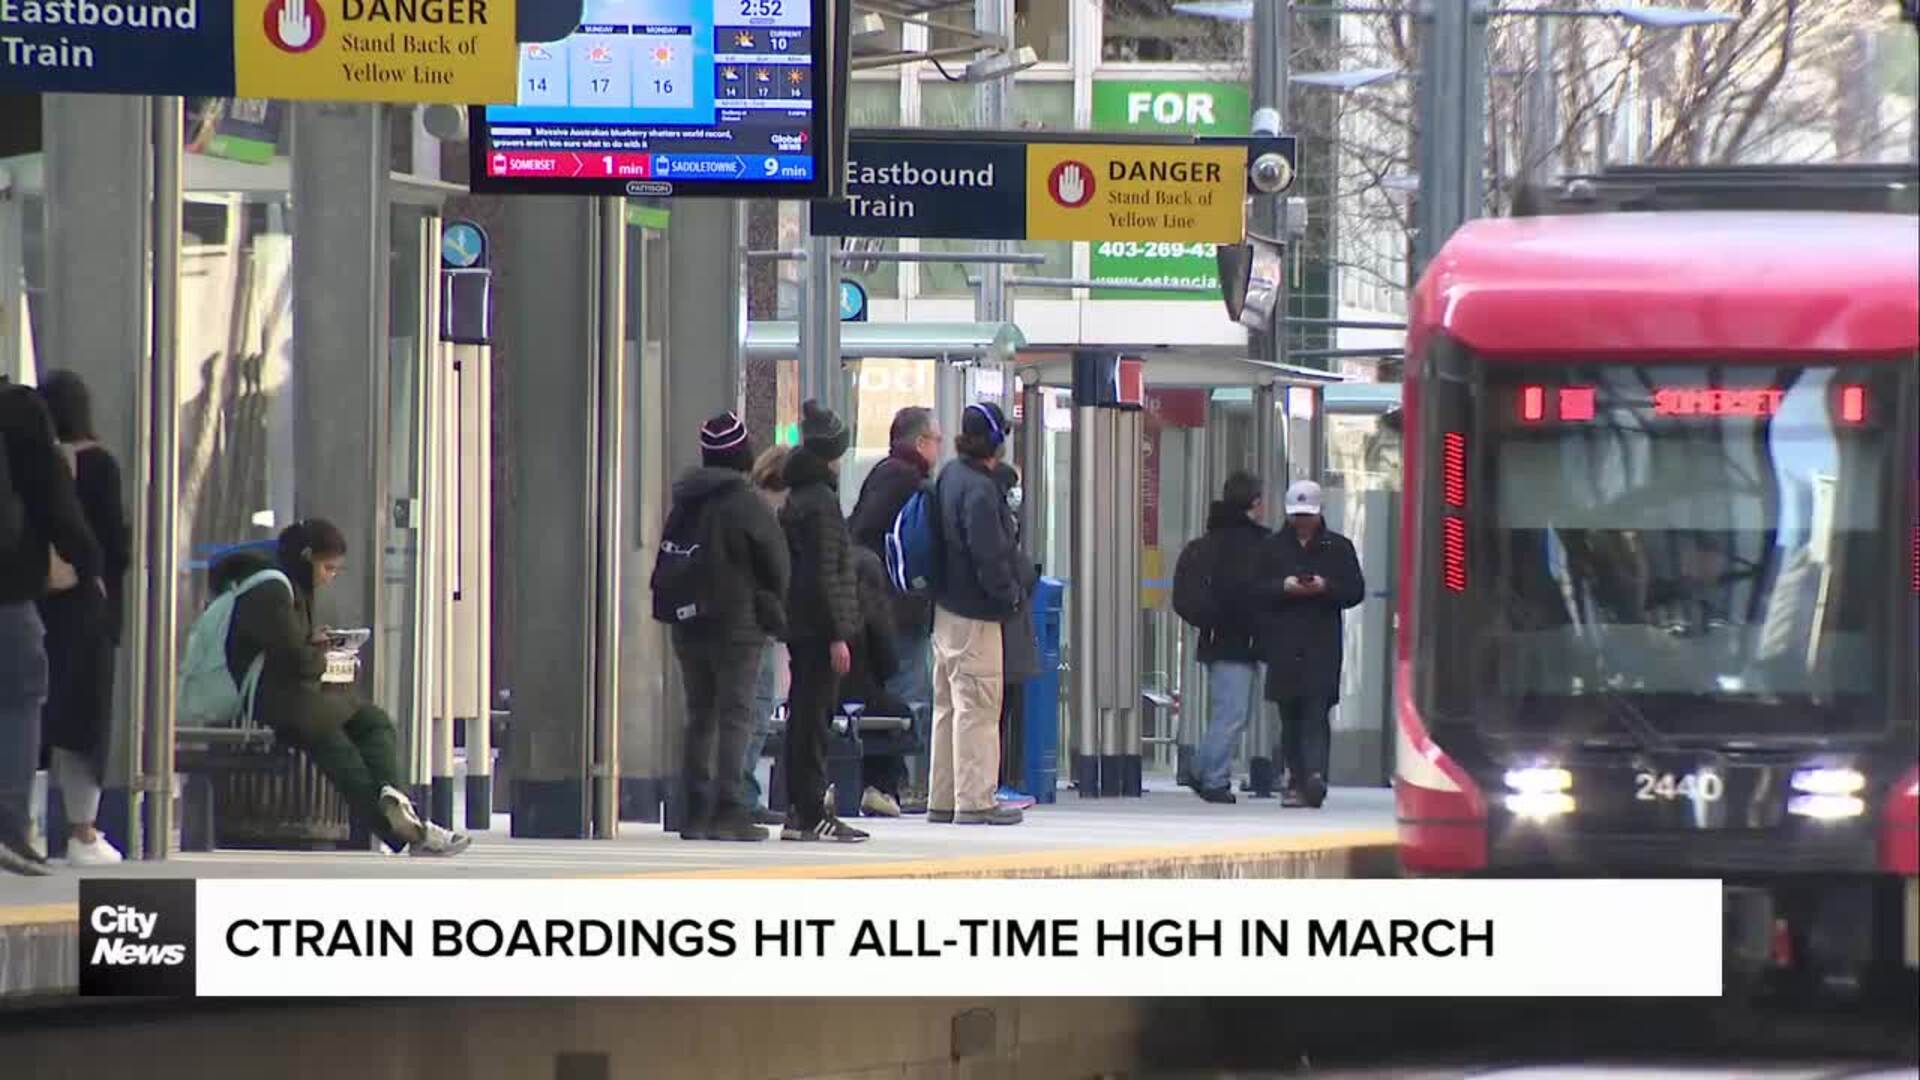 Calgary CTrain boardings hit all-time high